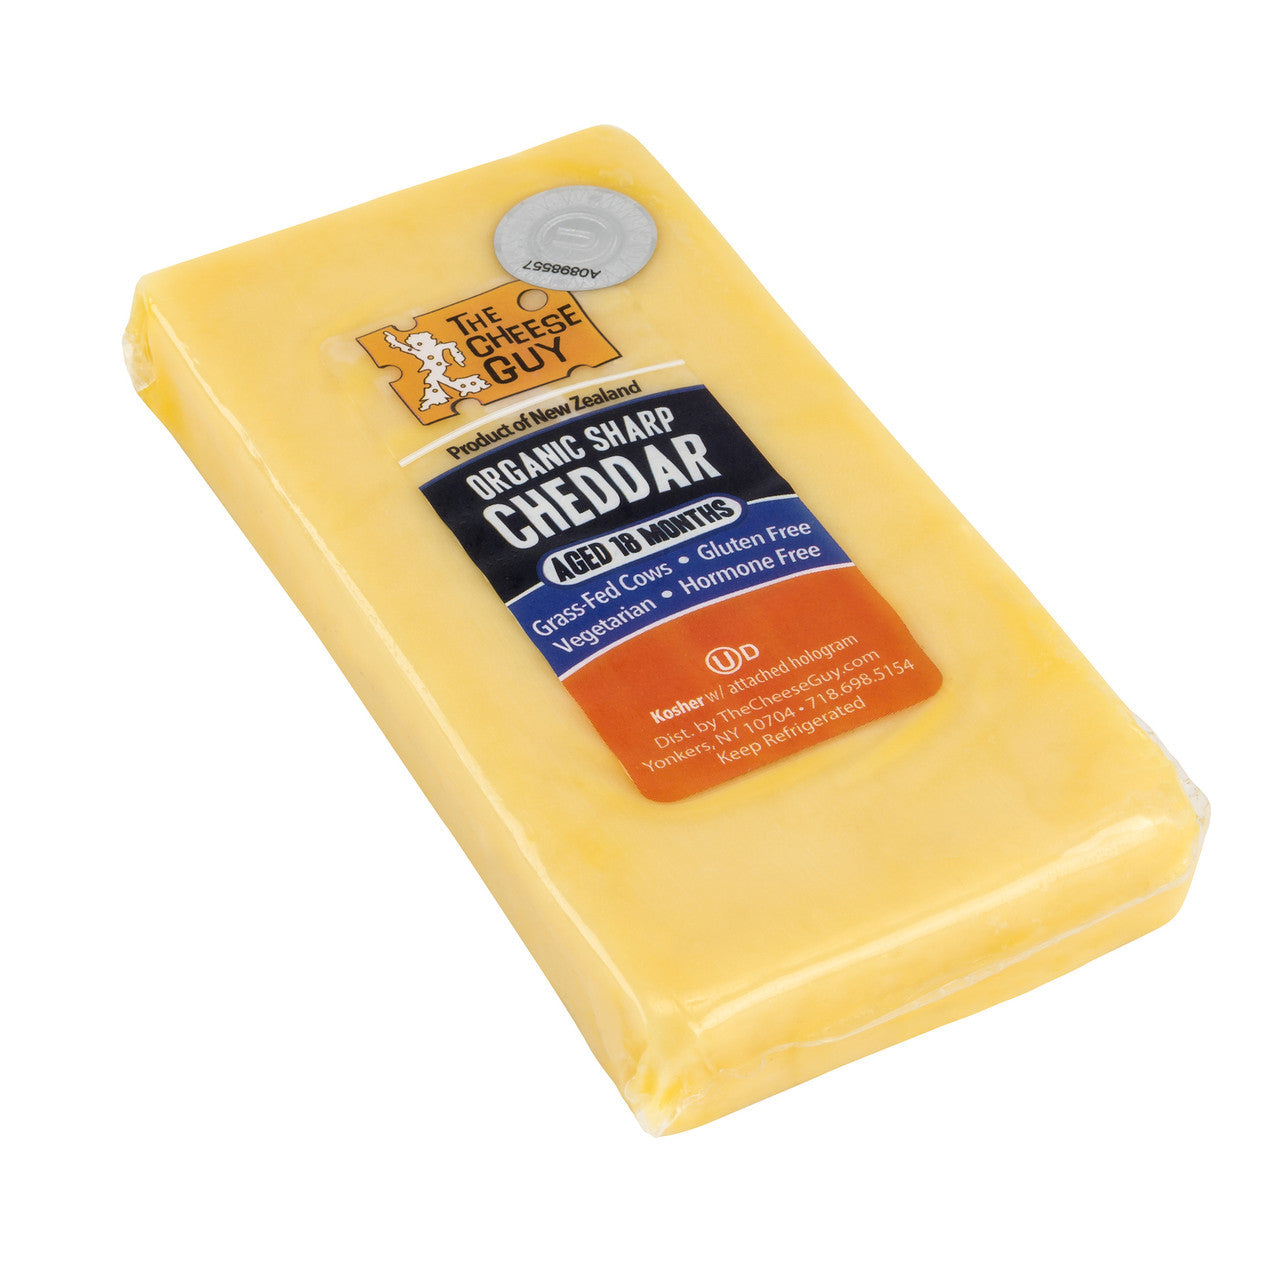 The Cheese Guy New Zealand Organic Sharp Cheddar 6.4oz 12ct